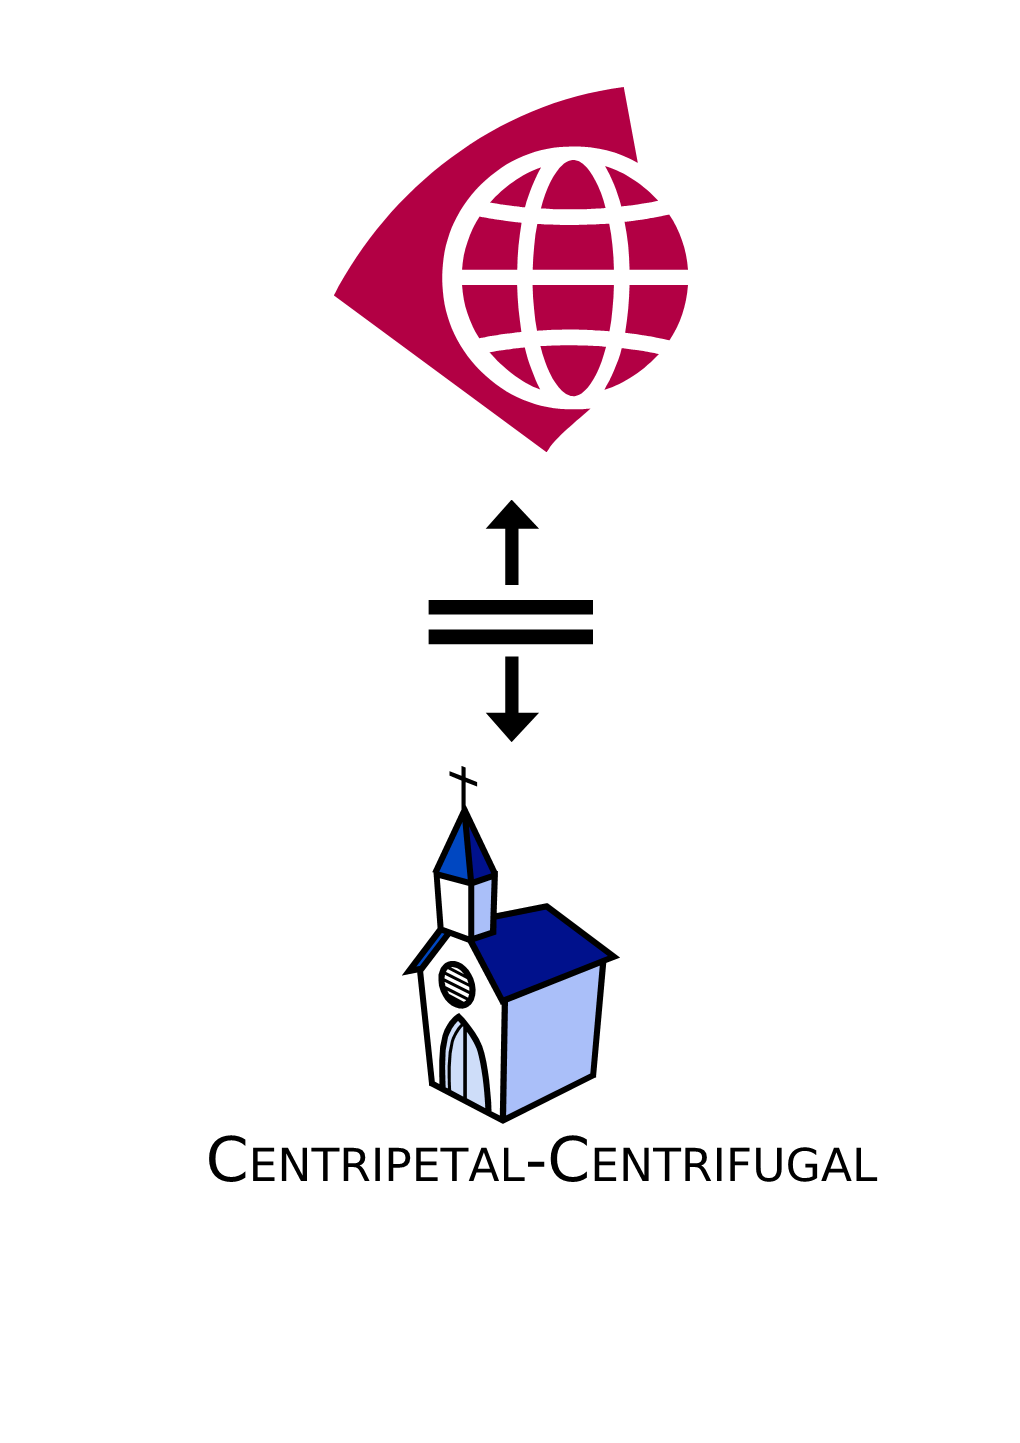 Are You Centripetal of Centrifugal